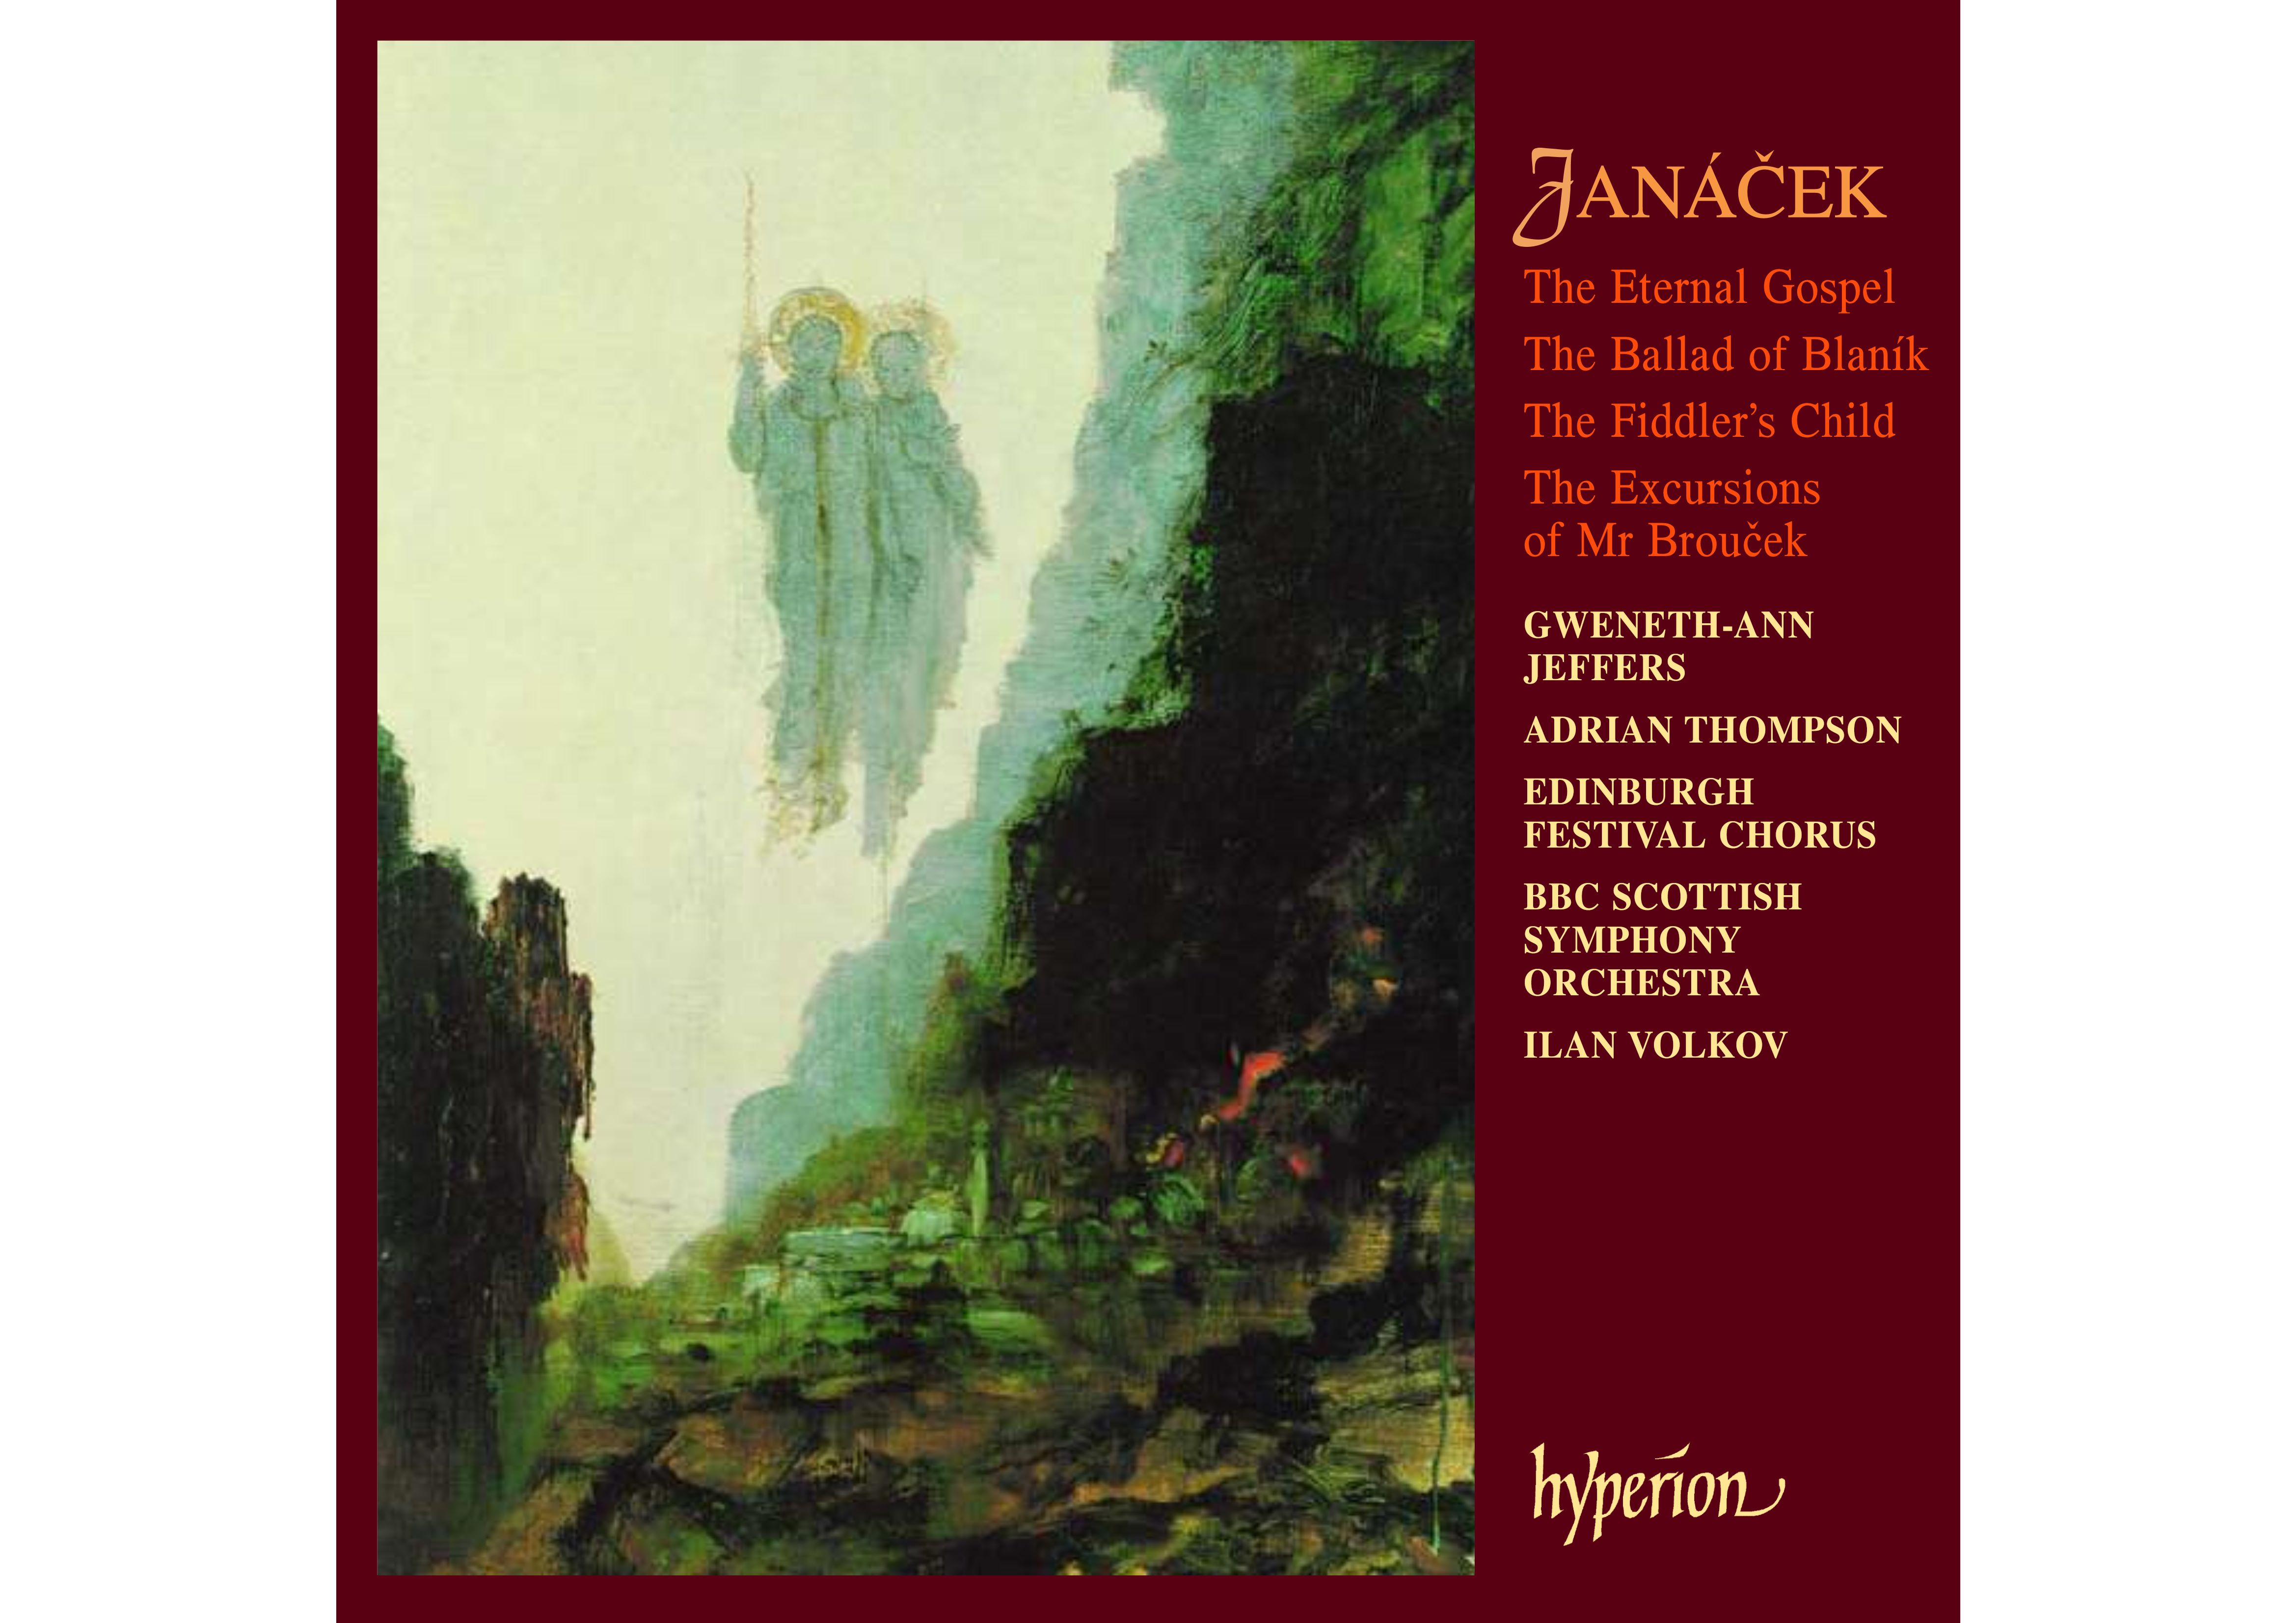 Janacek - Suite ''Excursions of Mr. Broucek'', Blanik, Eternal Gospel 24-44.1